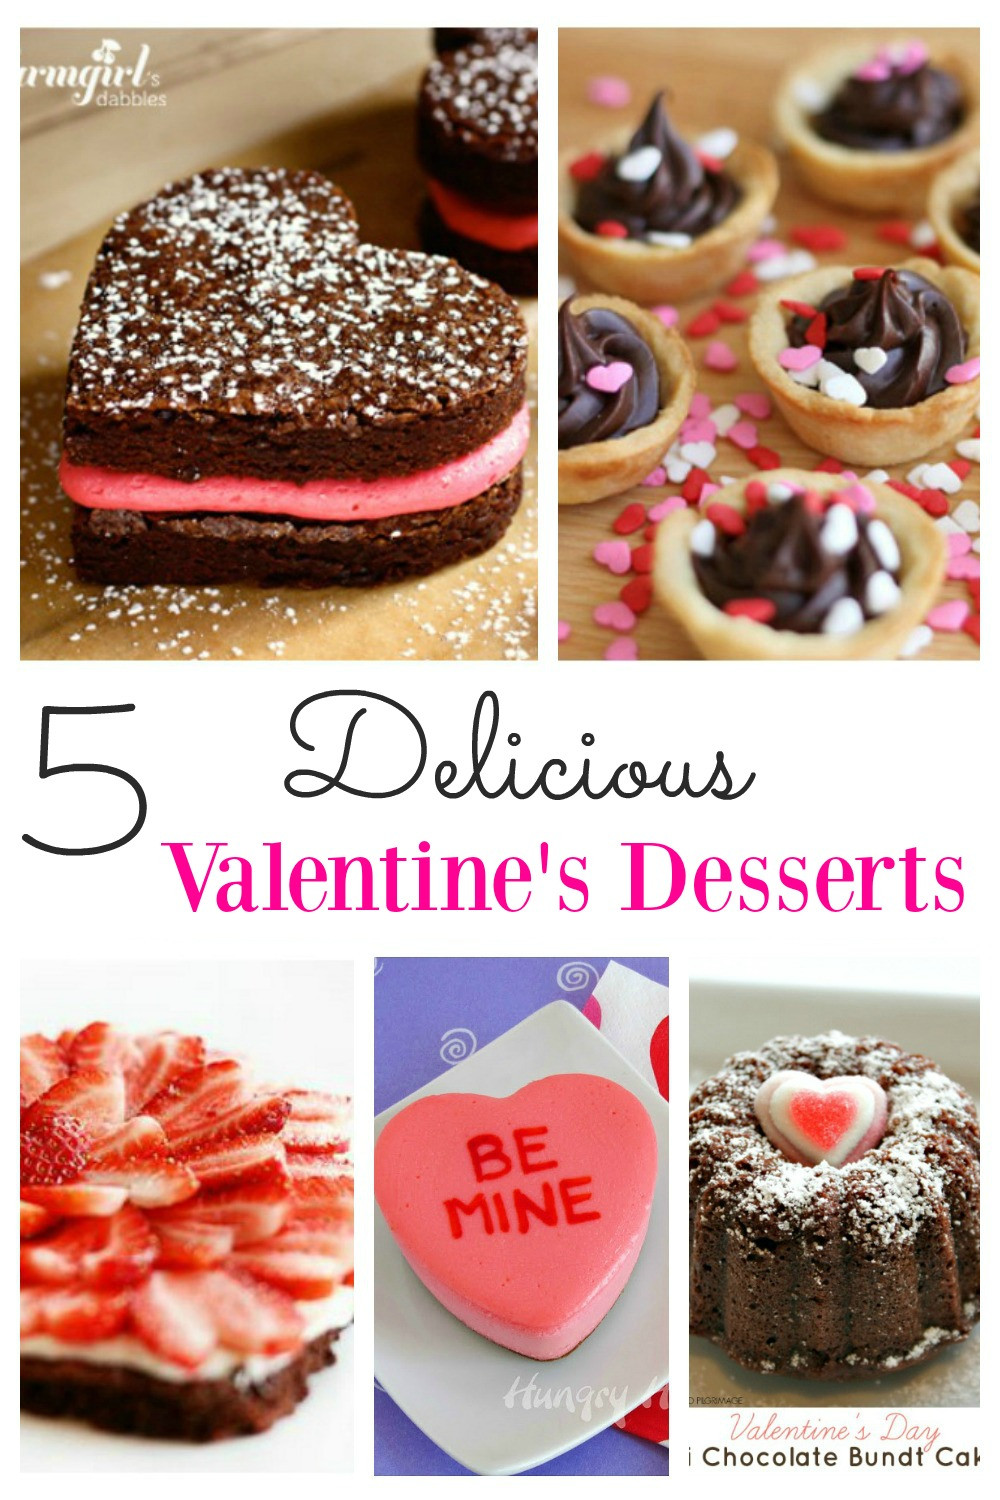 Valentines Recipes Desserts
 Delicious Valentines Desserts